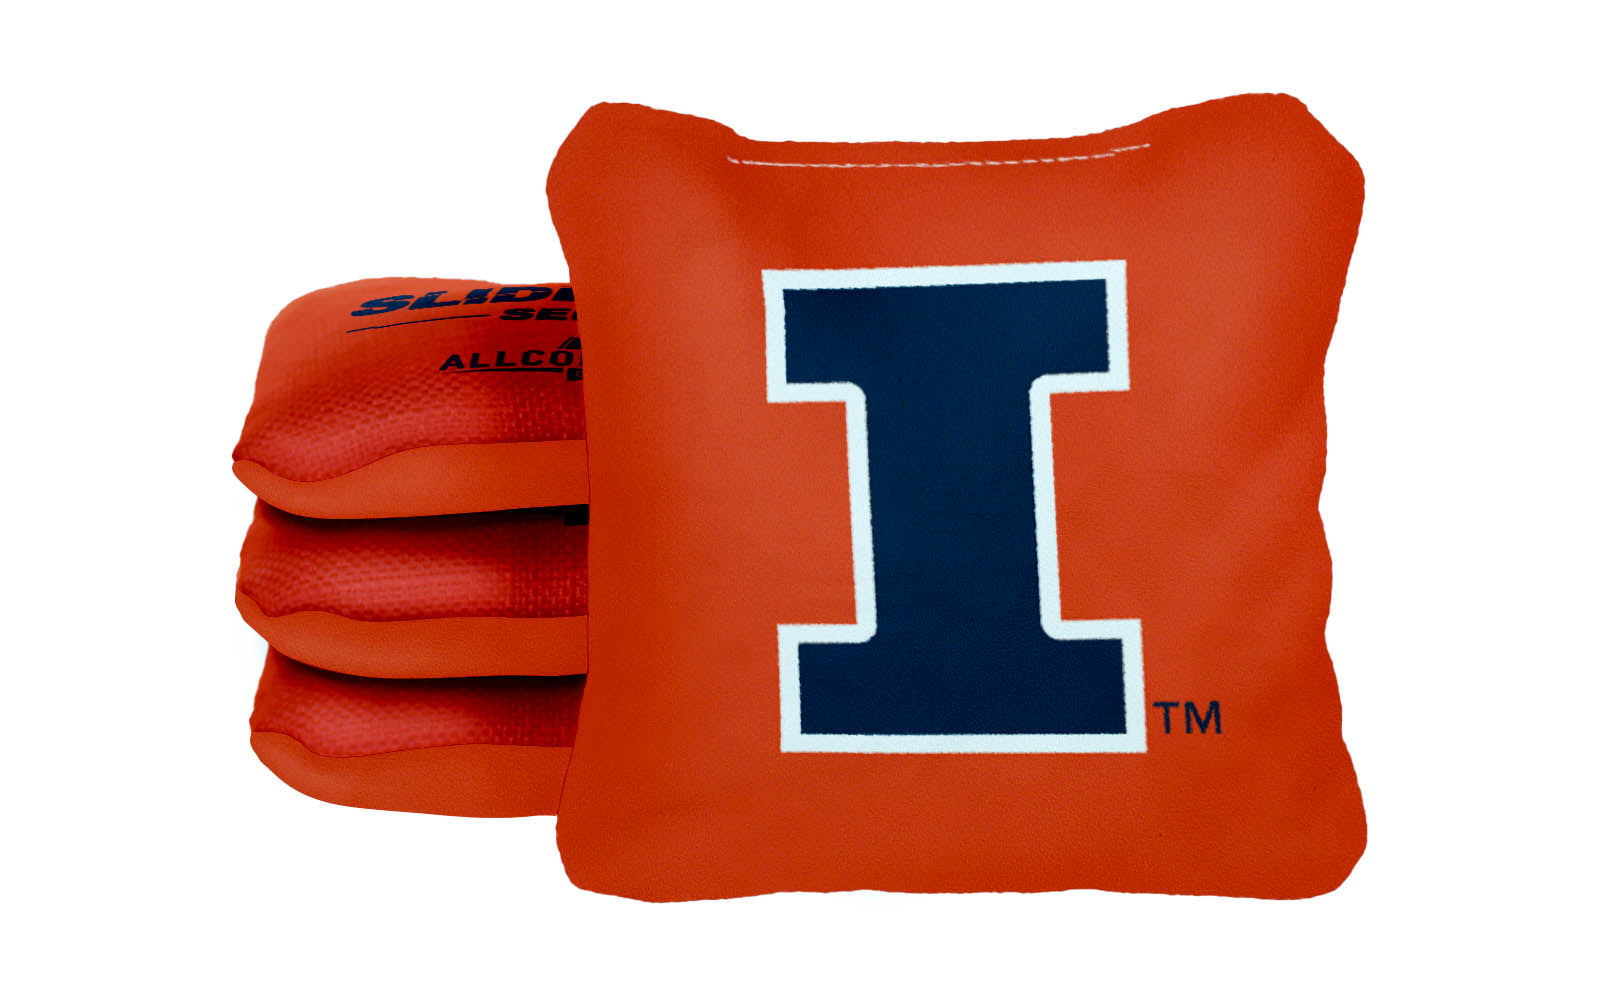 Officially Licensed Collegiate Cornhole Bags - Slide Rite - Set of 4 - University of Illinois